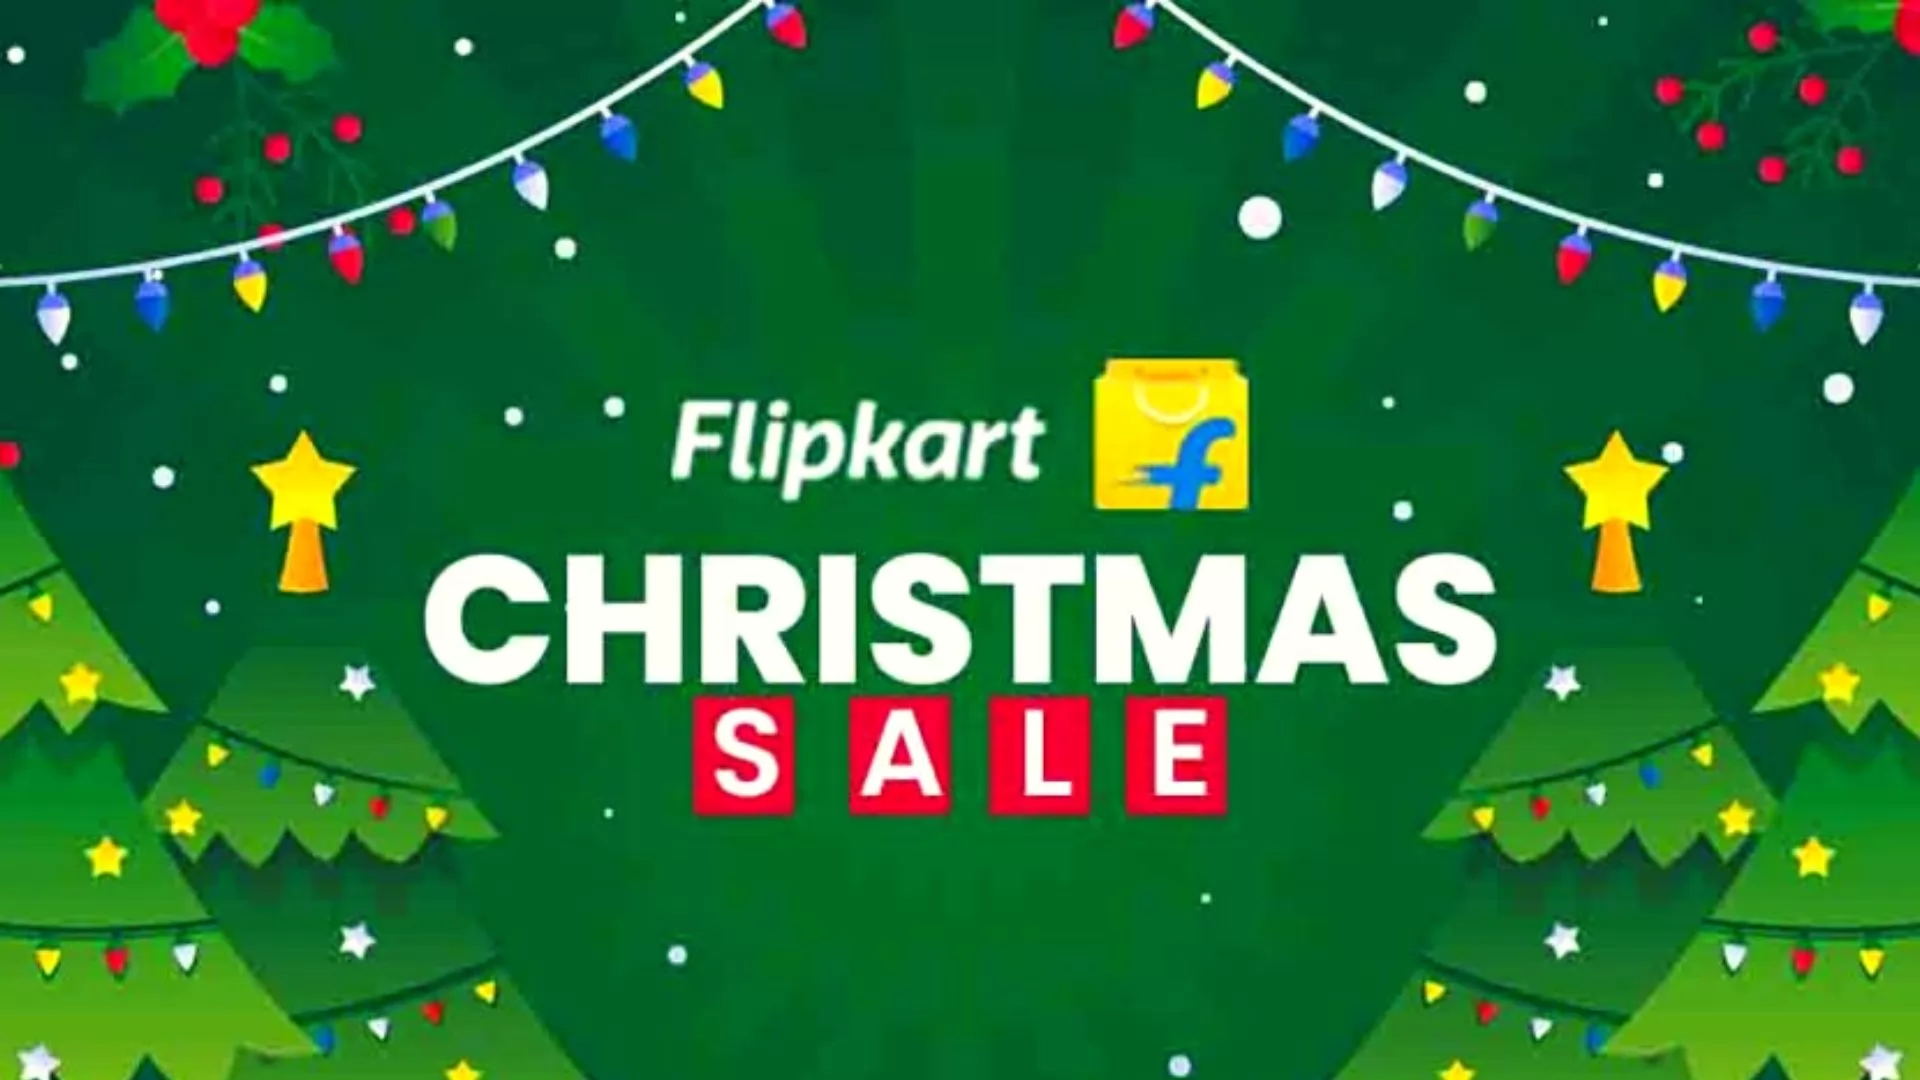 Flipkart Christmas Sale